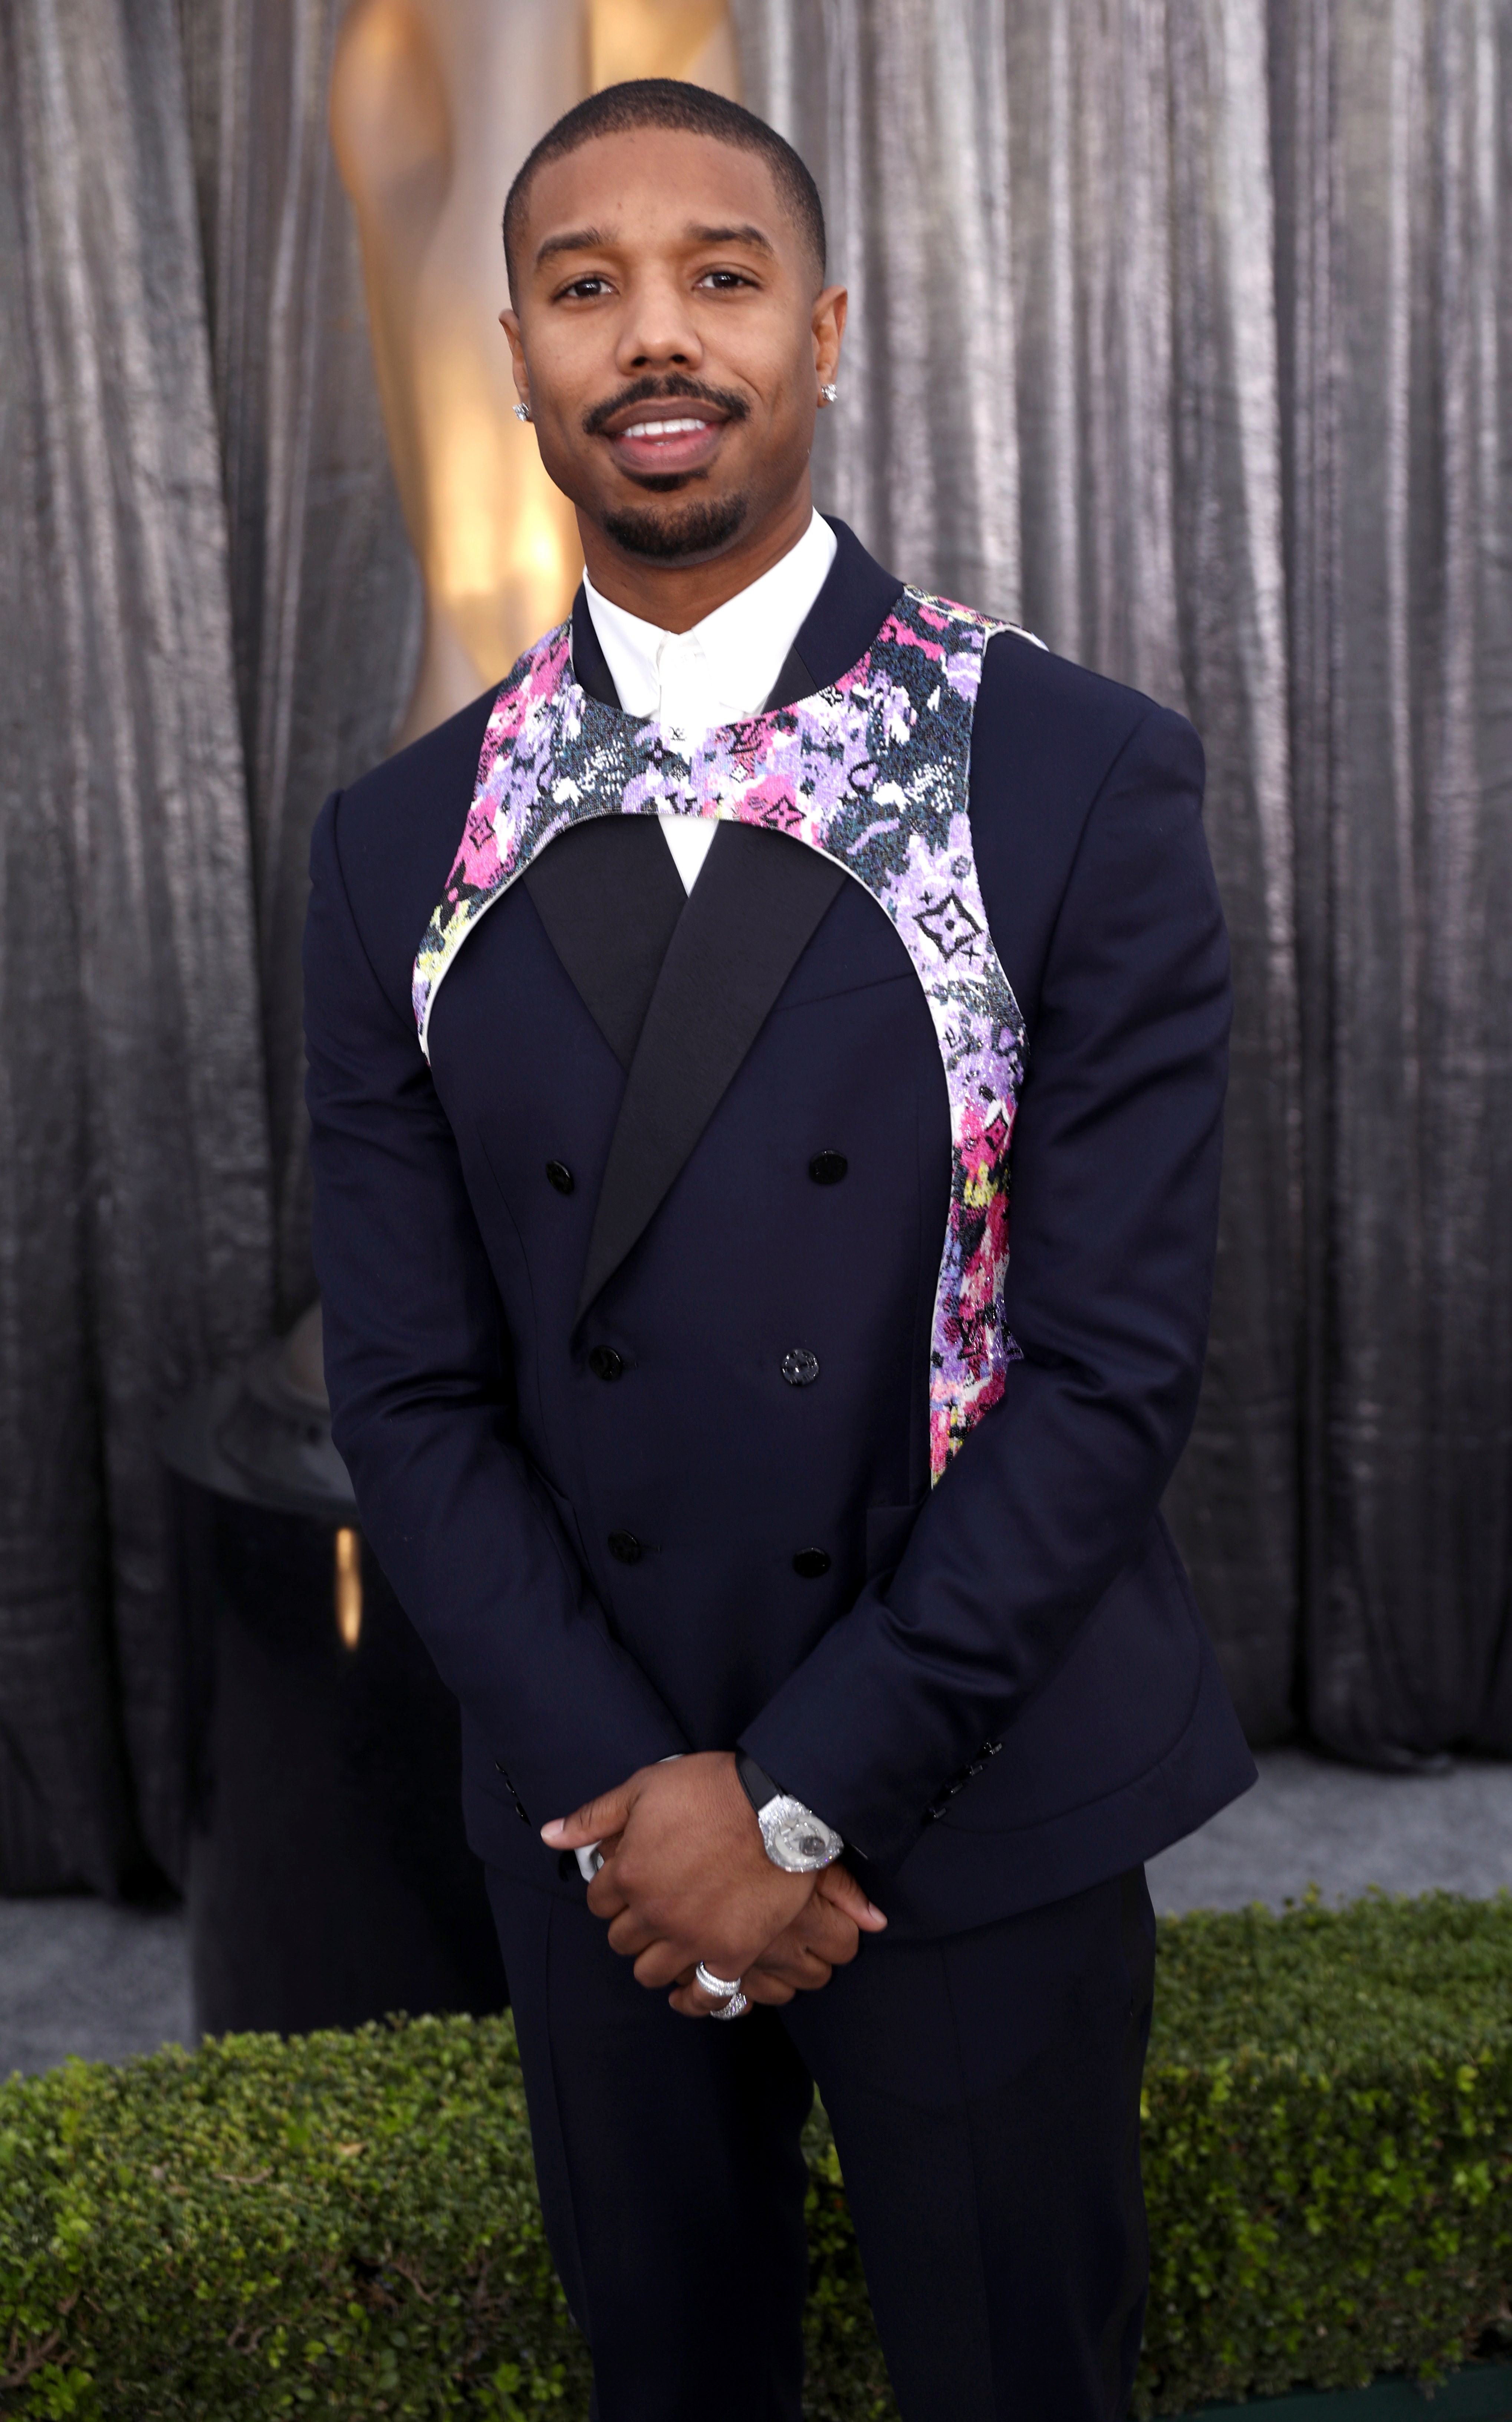 Michael B. Jordan is latest celeb to wear 'awards show harness' on